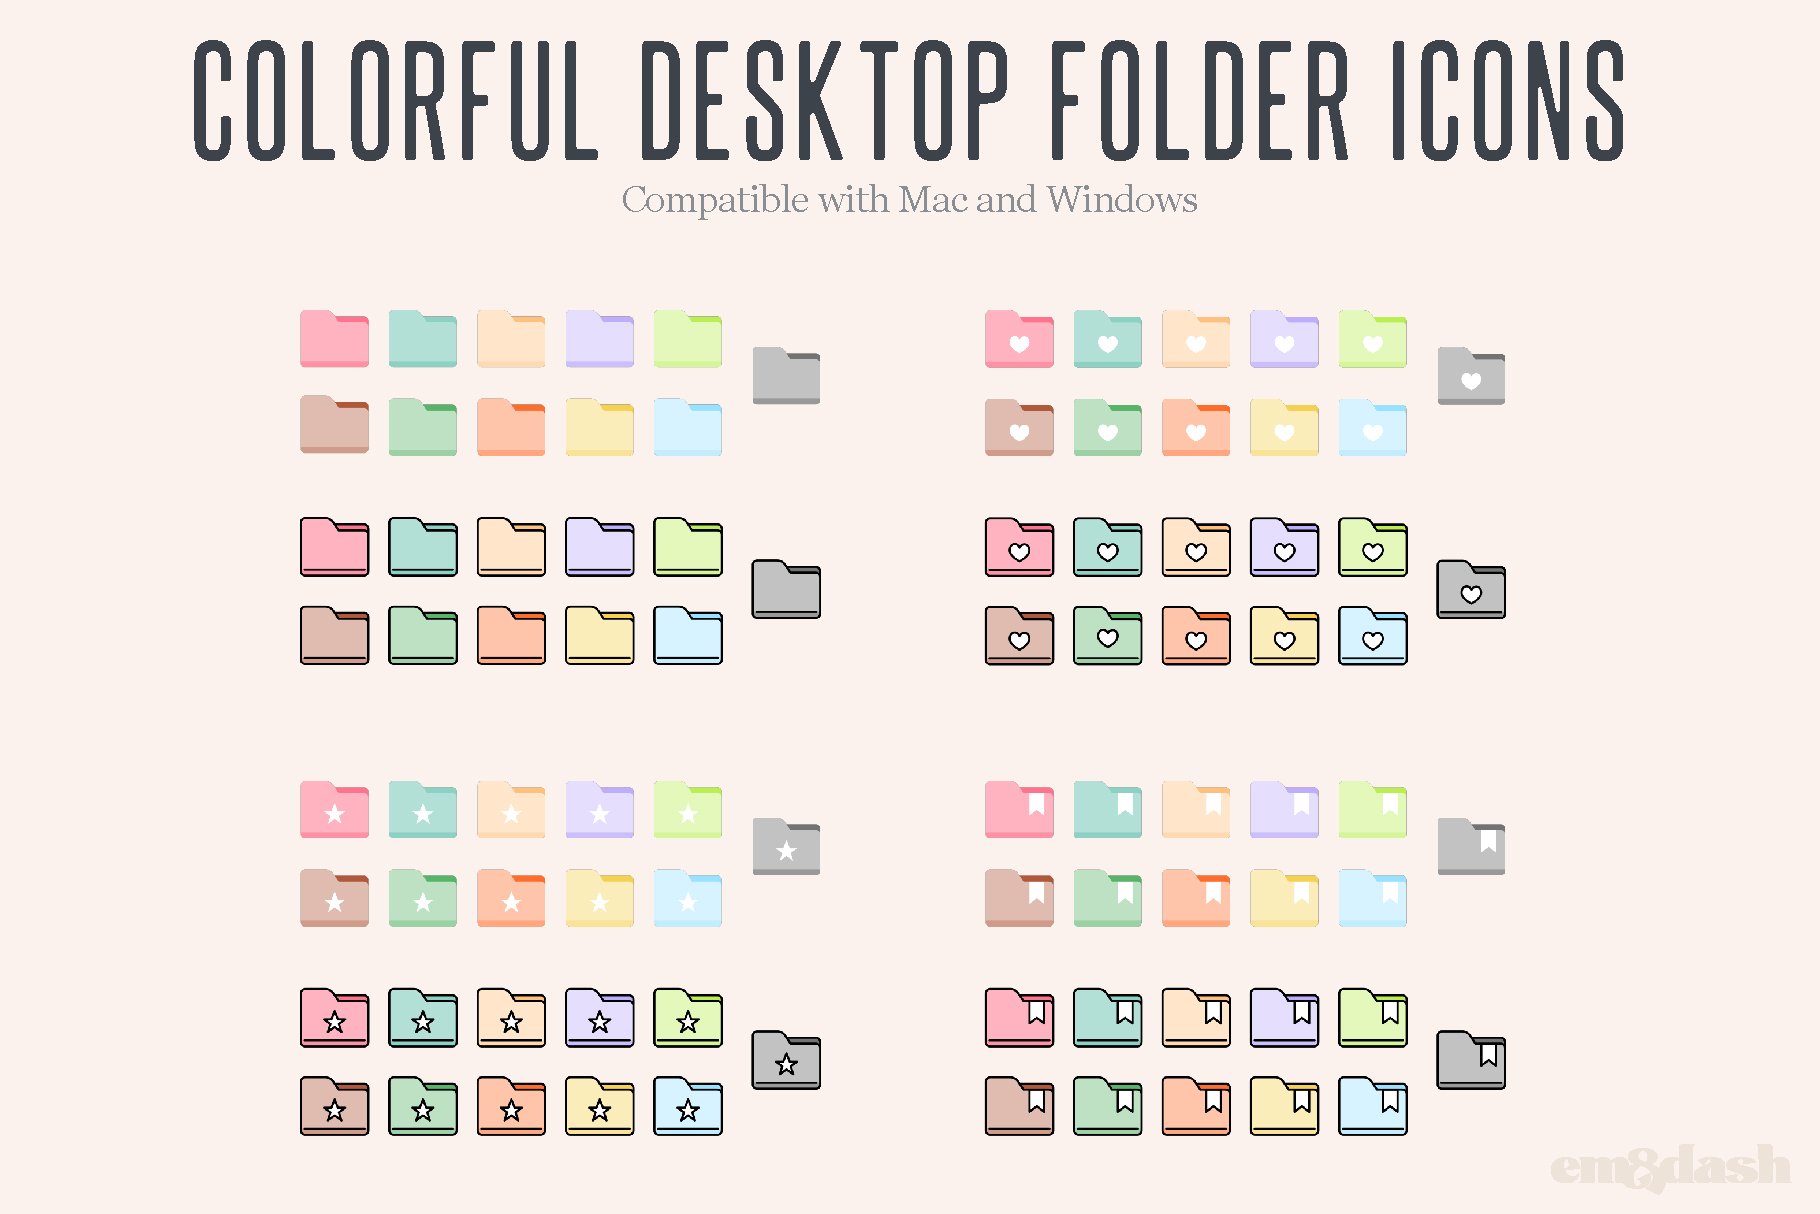 Colorful Desktop Folder Icons cover image.